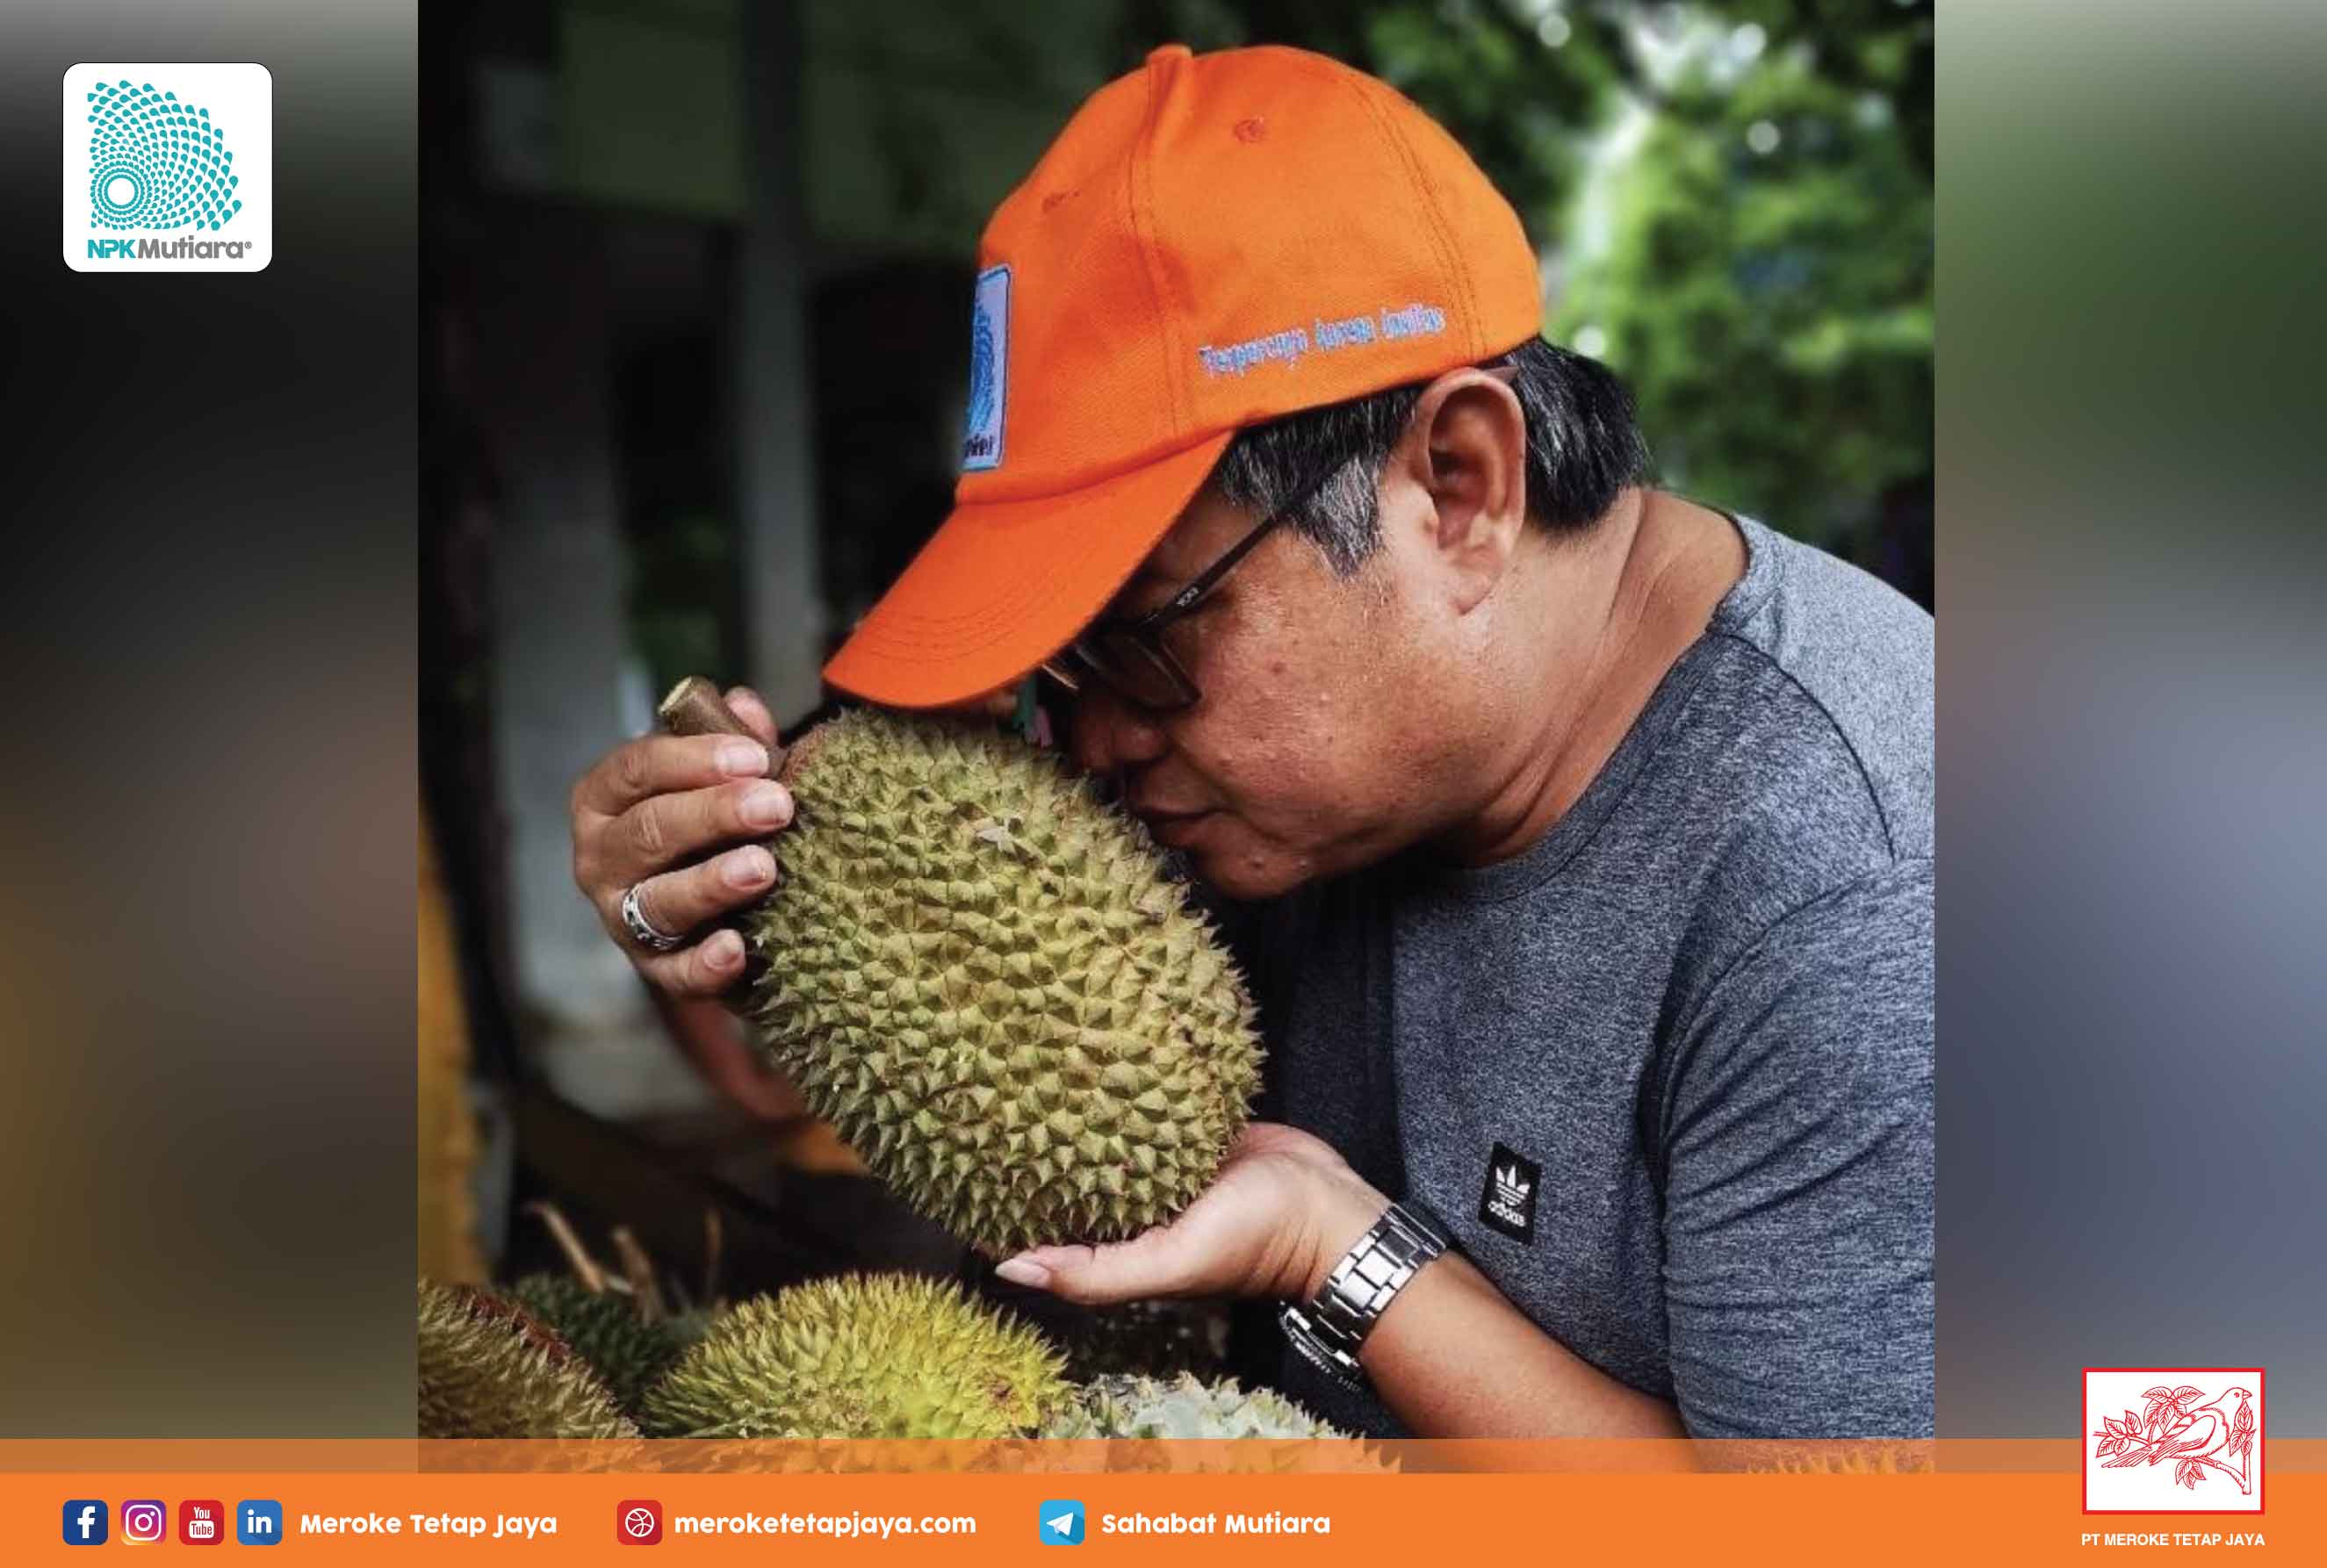 Rahasia Durian Enak